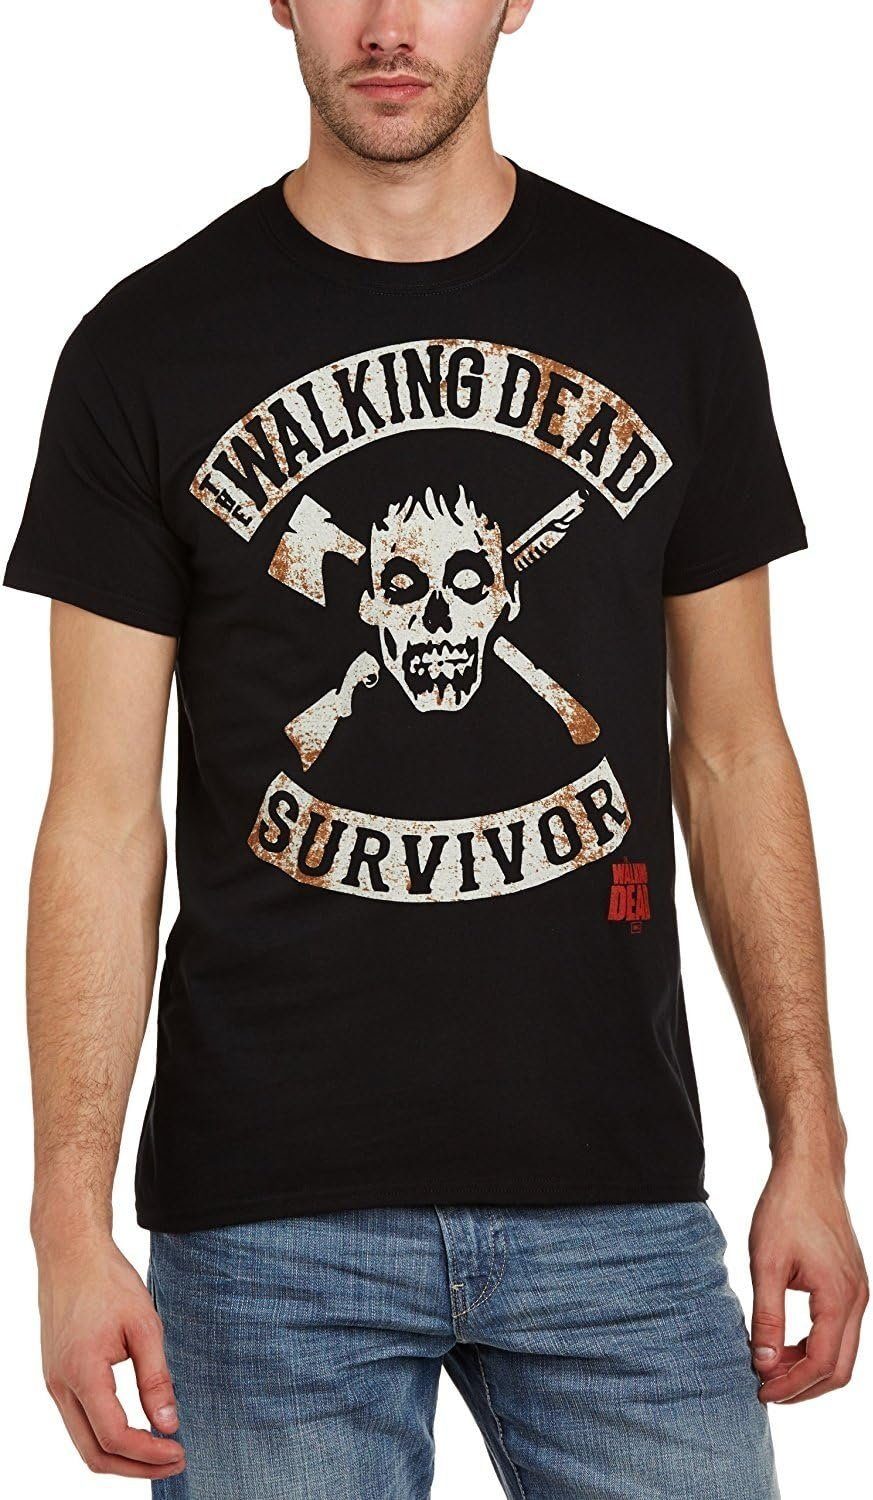 Walking Black T-Shirt Survivoir Wakling XL The The Print-Shirt Dead Staffel Walking S Dead Dead The